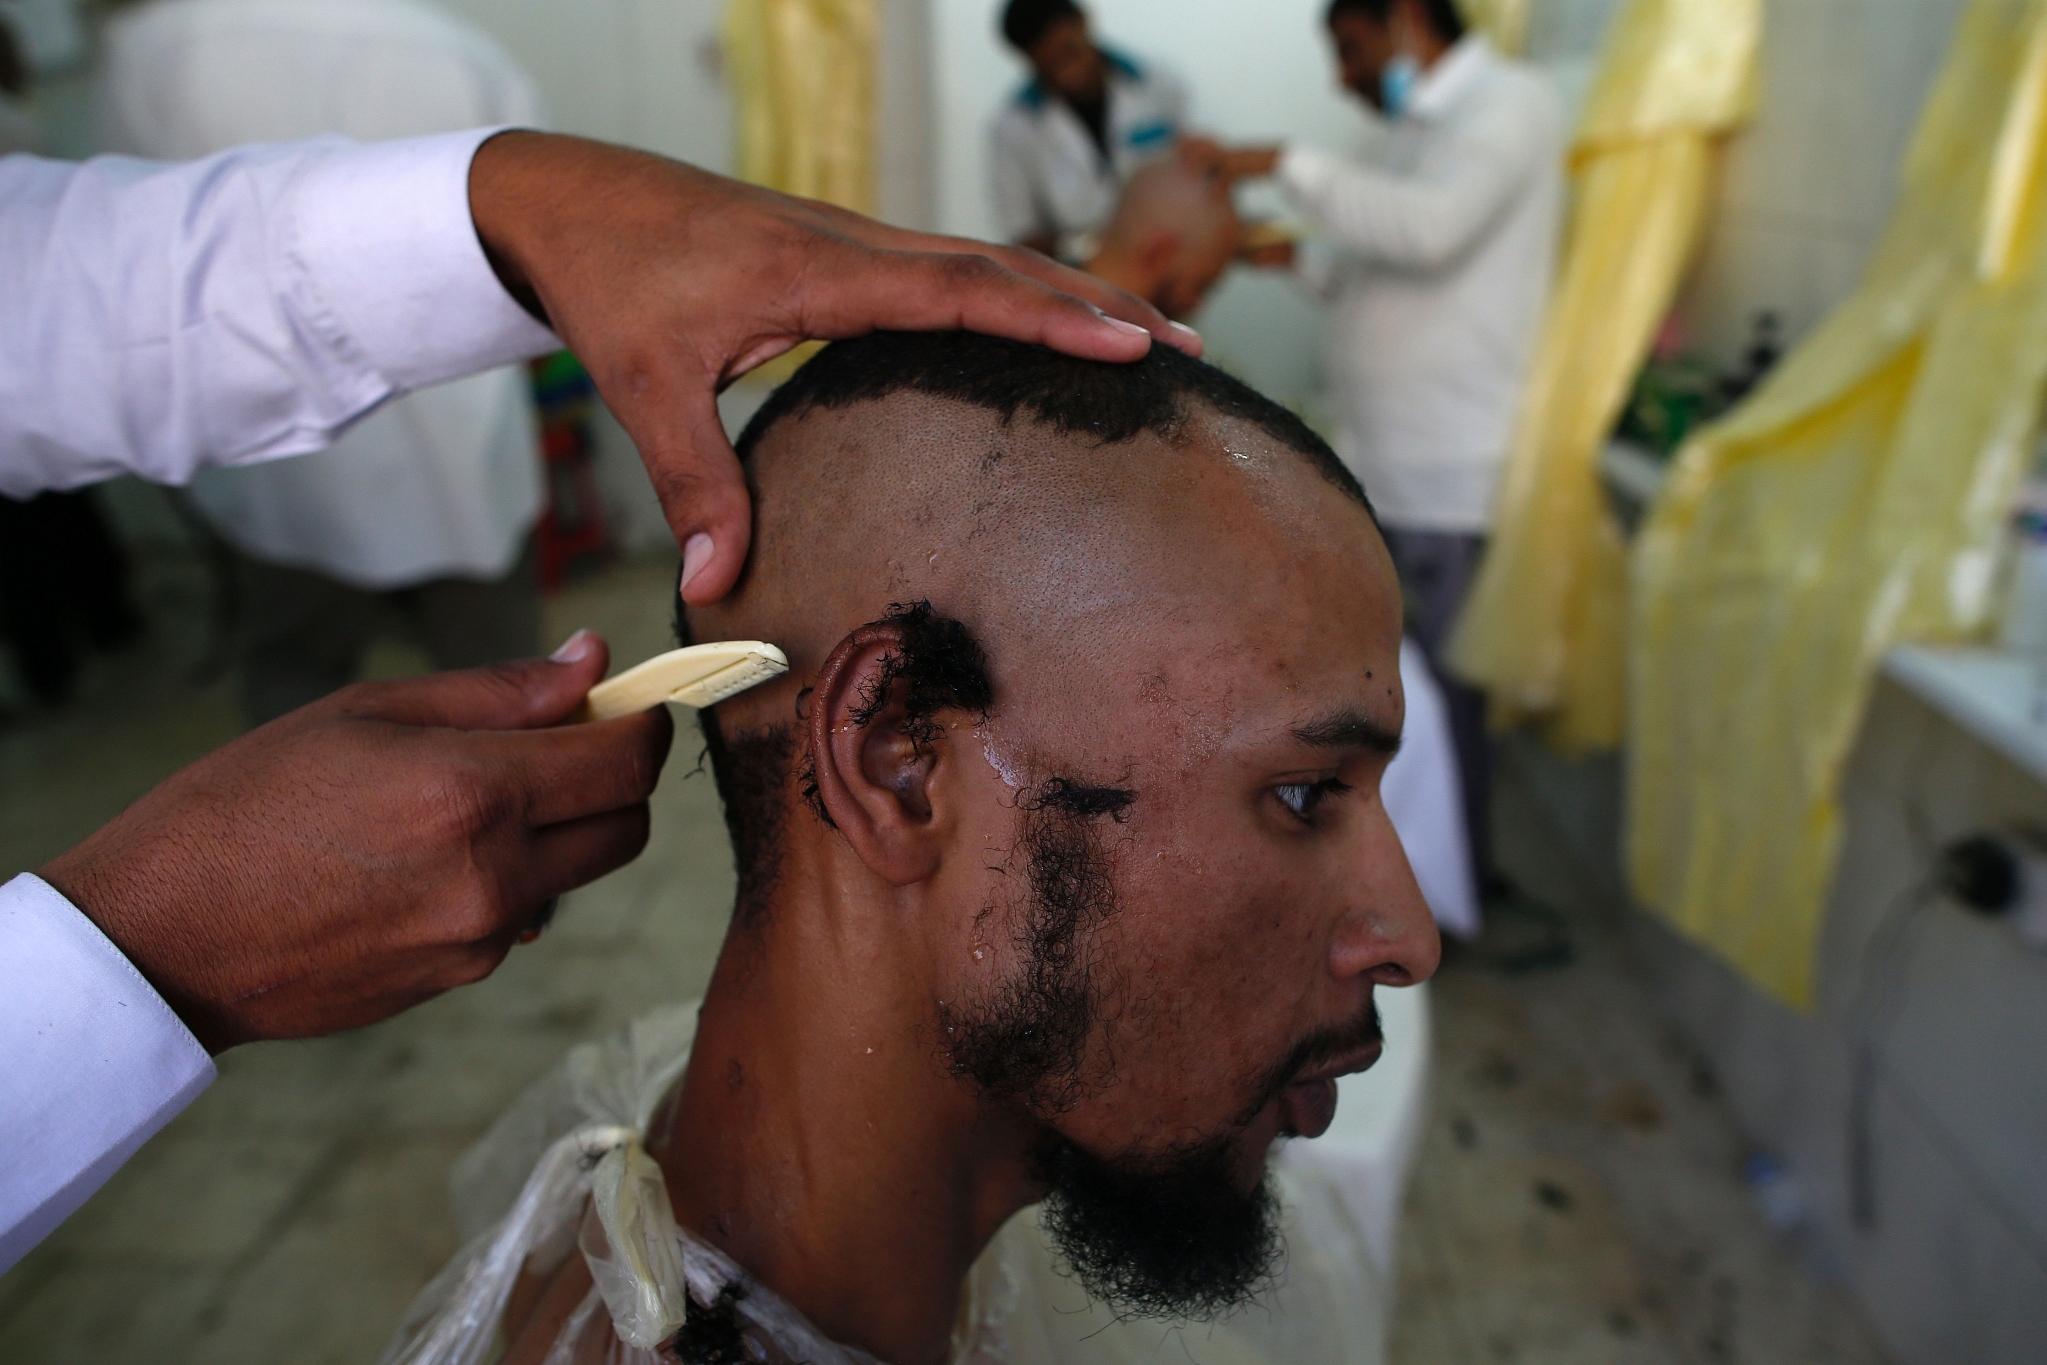 A Muslim man gets his head shaved in Saudi Arabia (AHMAD GHARABLI/AFP/Getty Images)